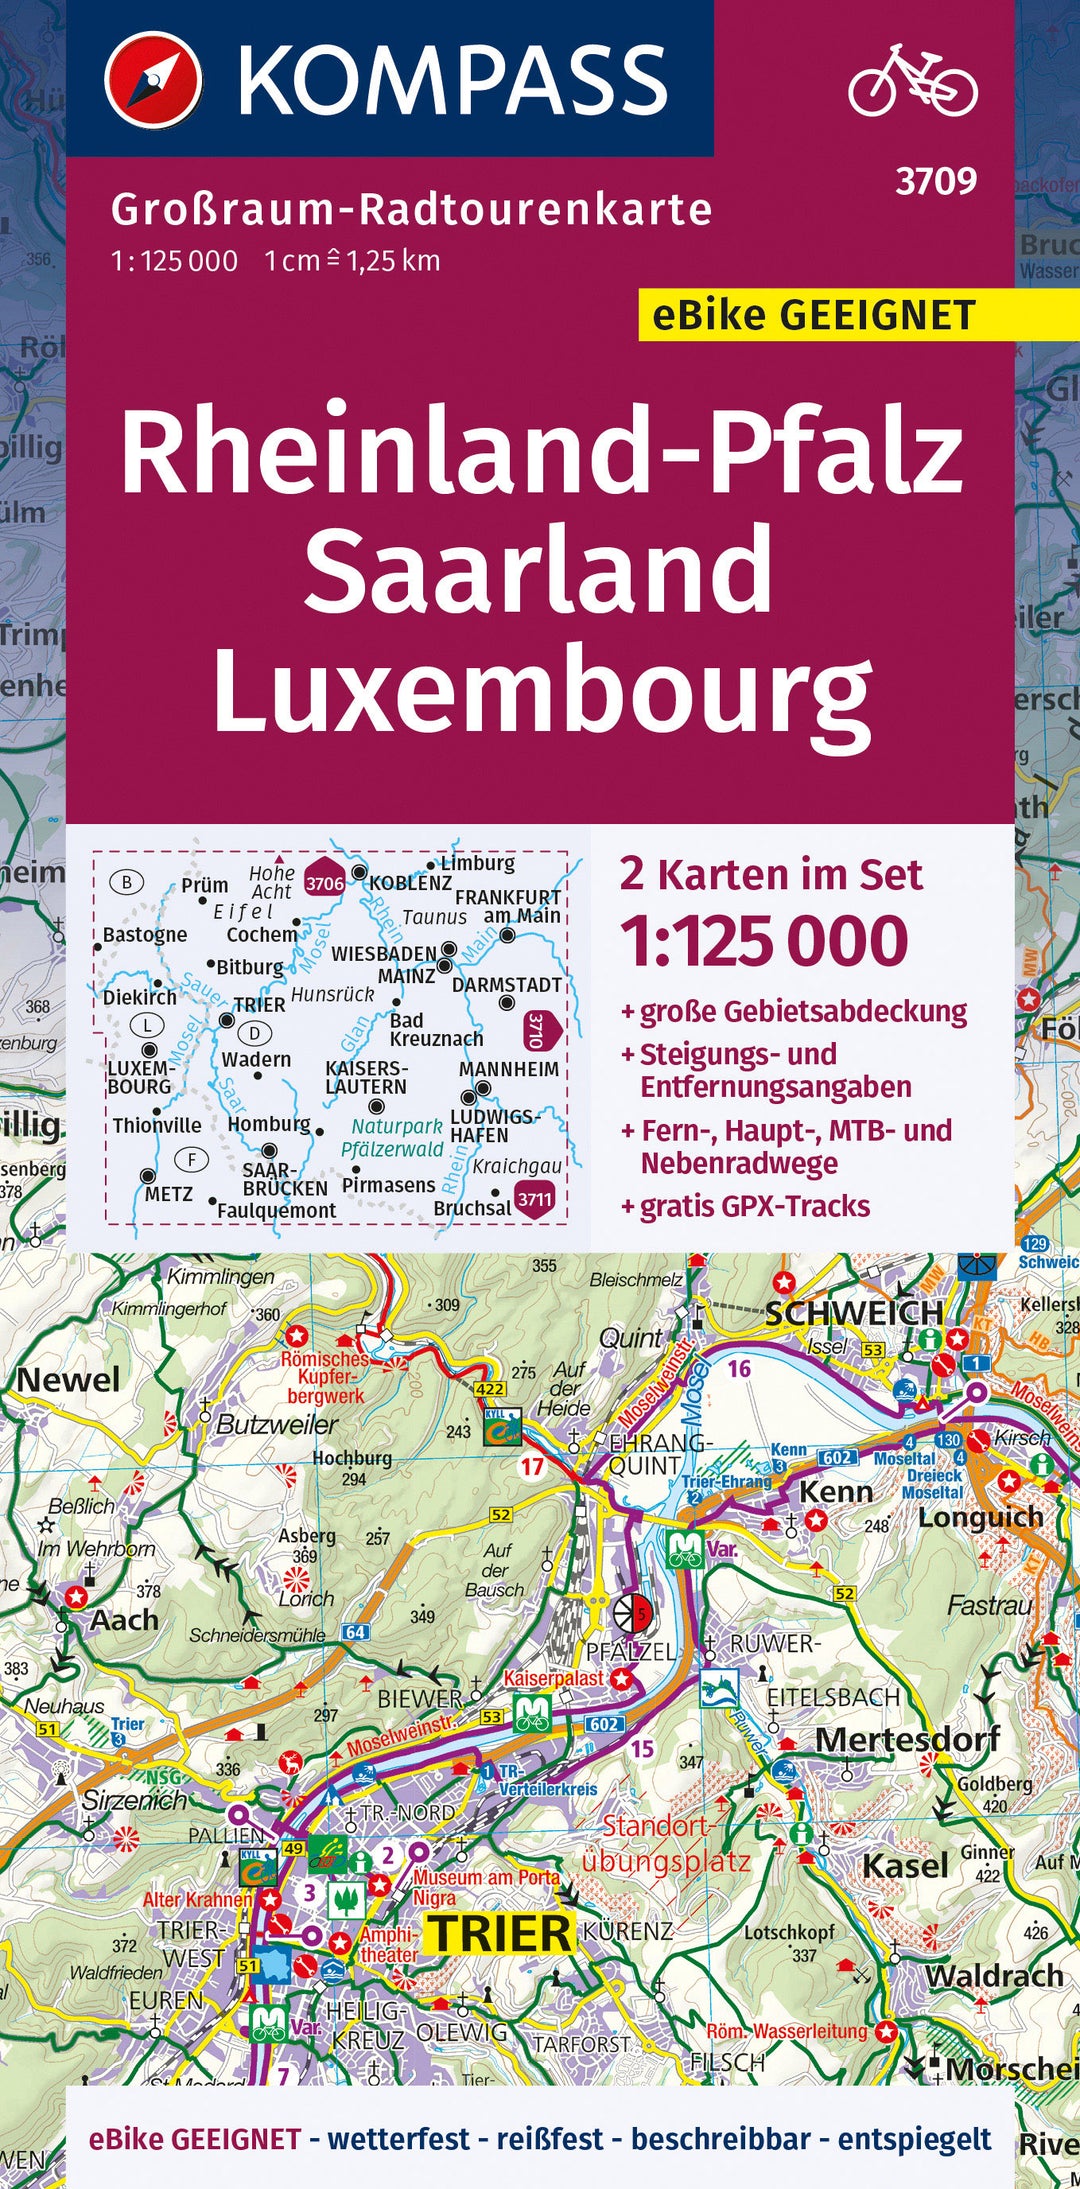 Cycling map no. F3709 - Rheinland-Pfalz, Saarland, Luxembourg | Kompass